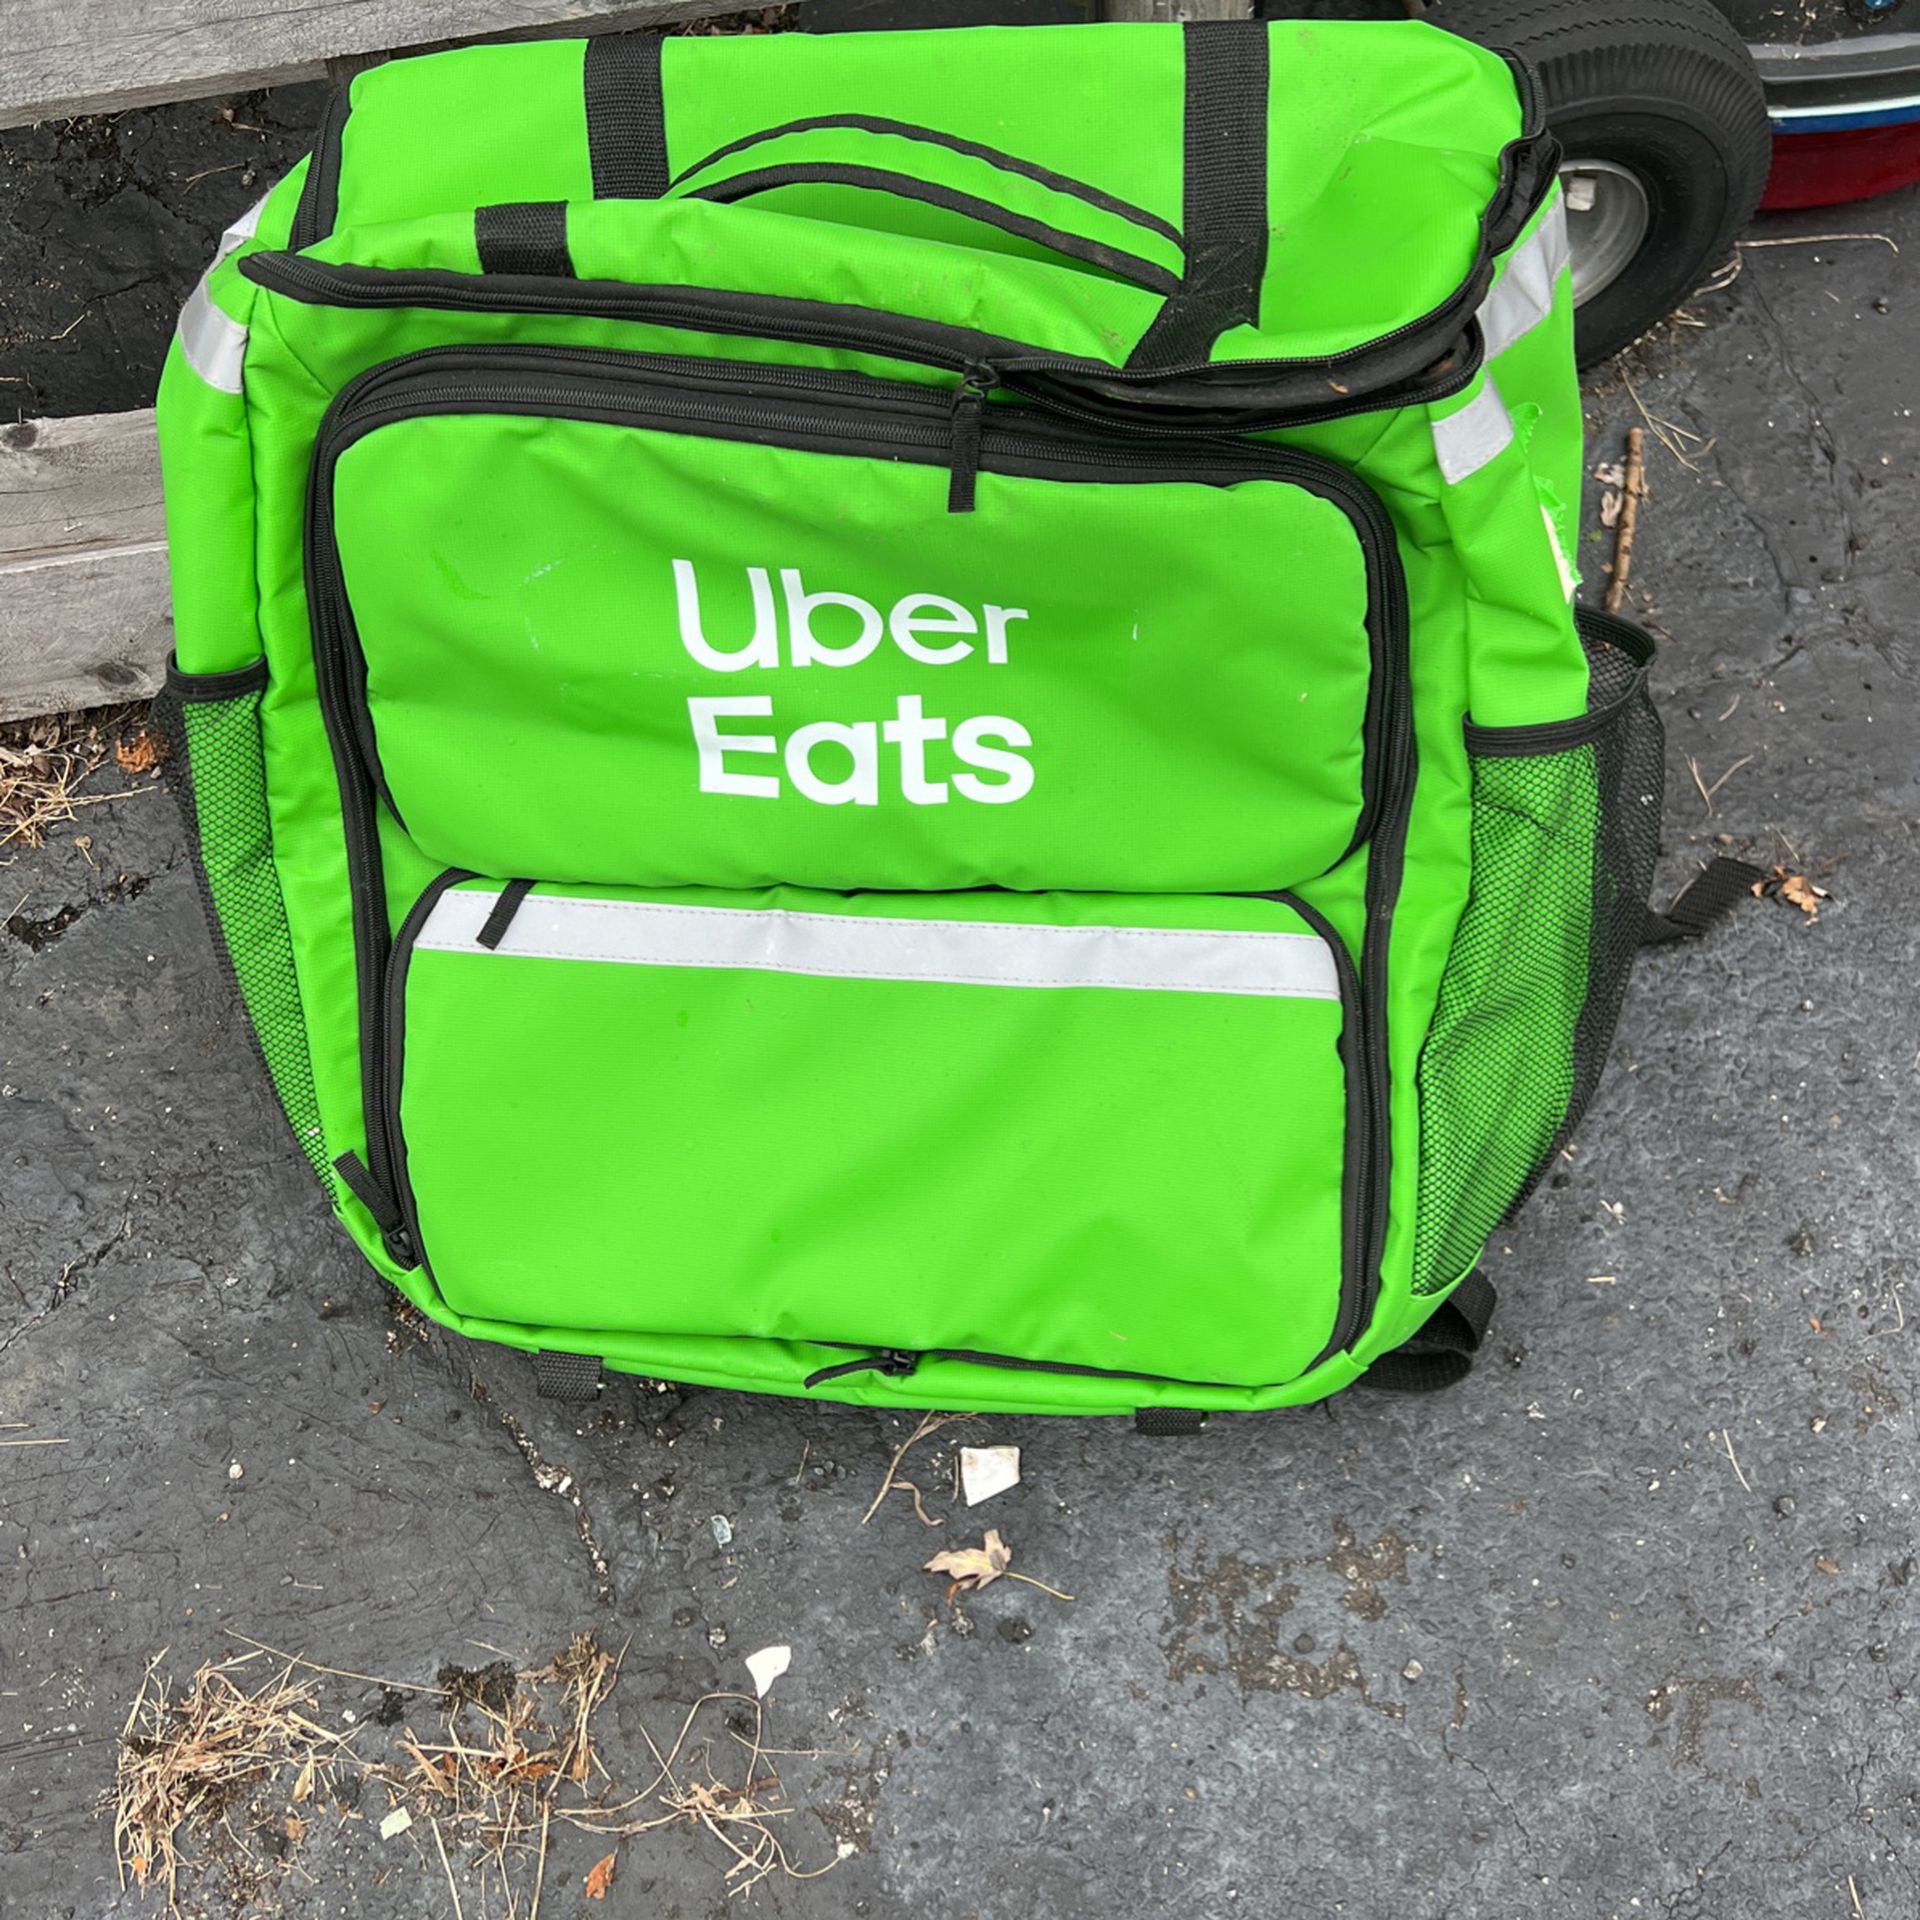 Uber eats bag backpack type